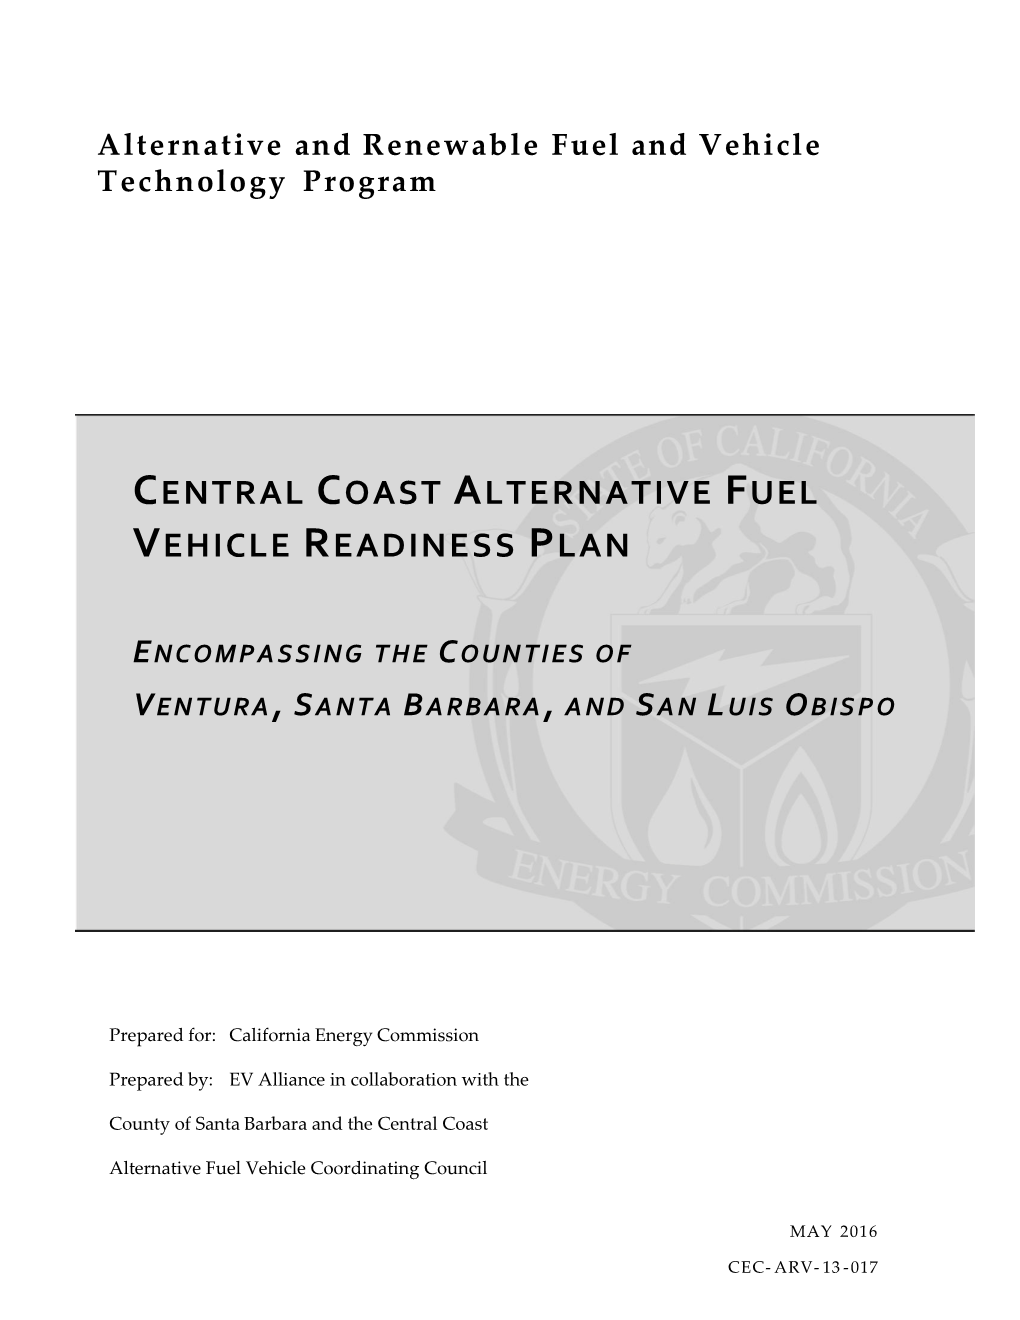 Central Coast Alternative Fuel Vehicle Readiness Plan